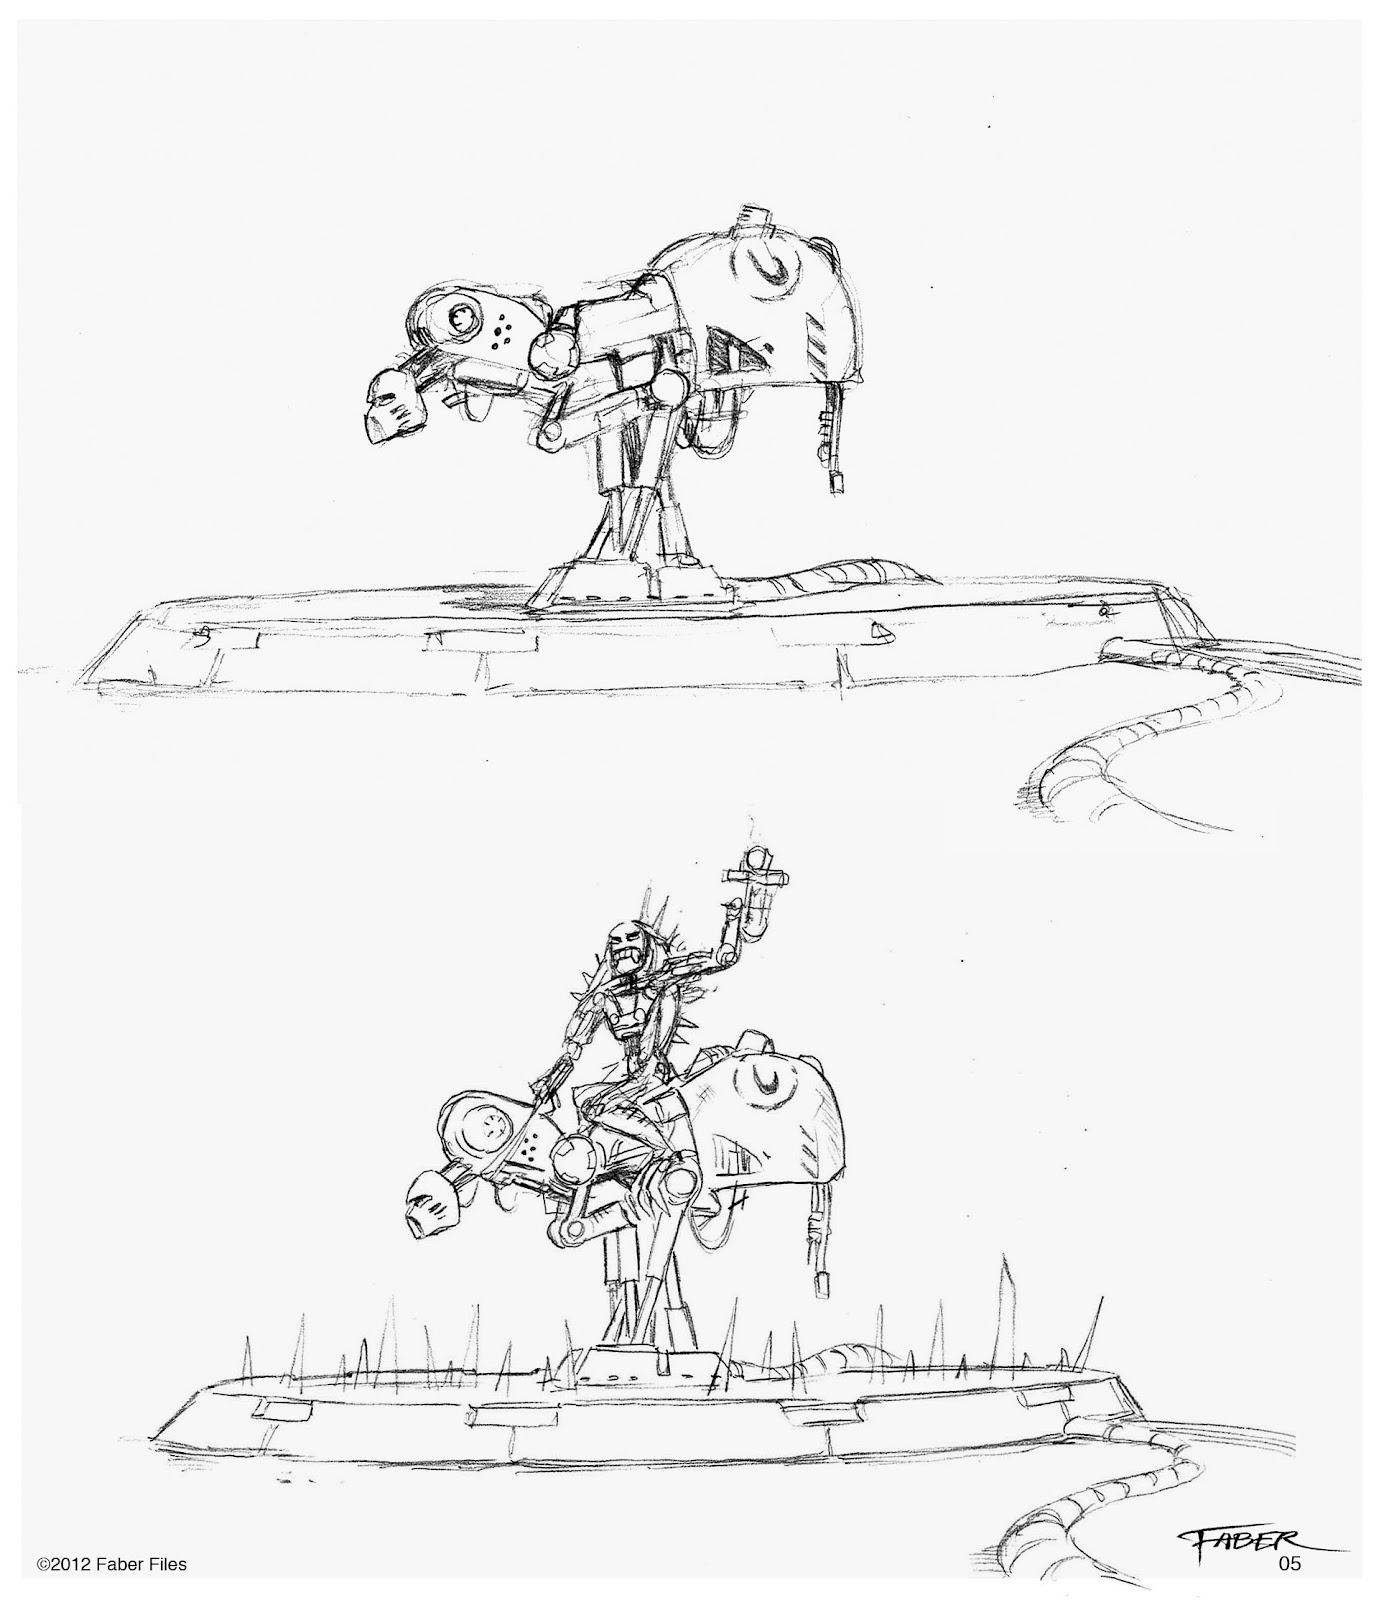 Bionicle Concept Arts - Página 4 Christian+Faber+Files_Piraka+bullride